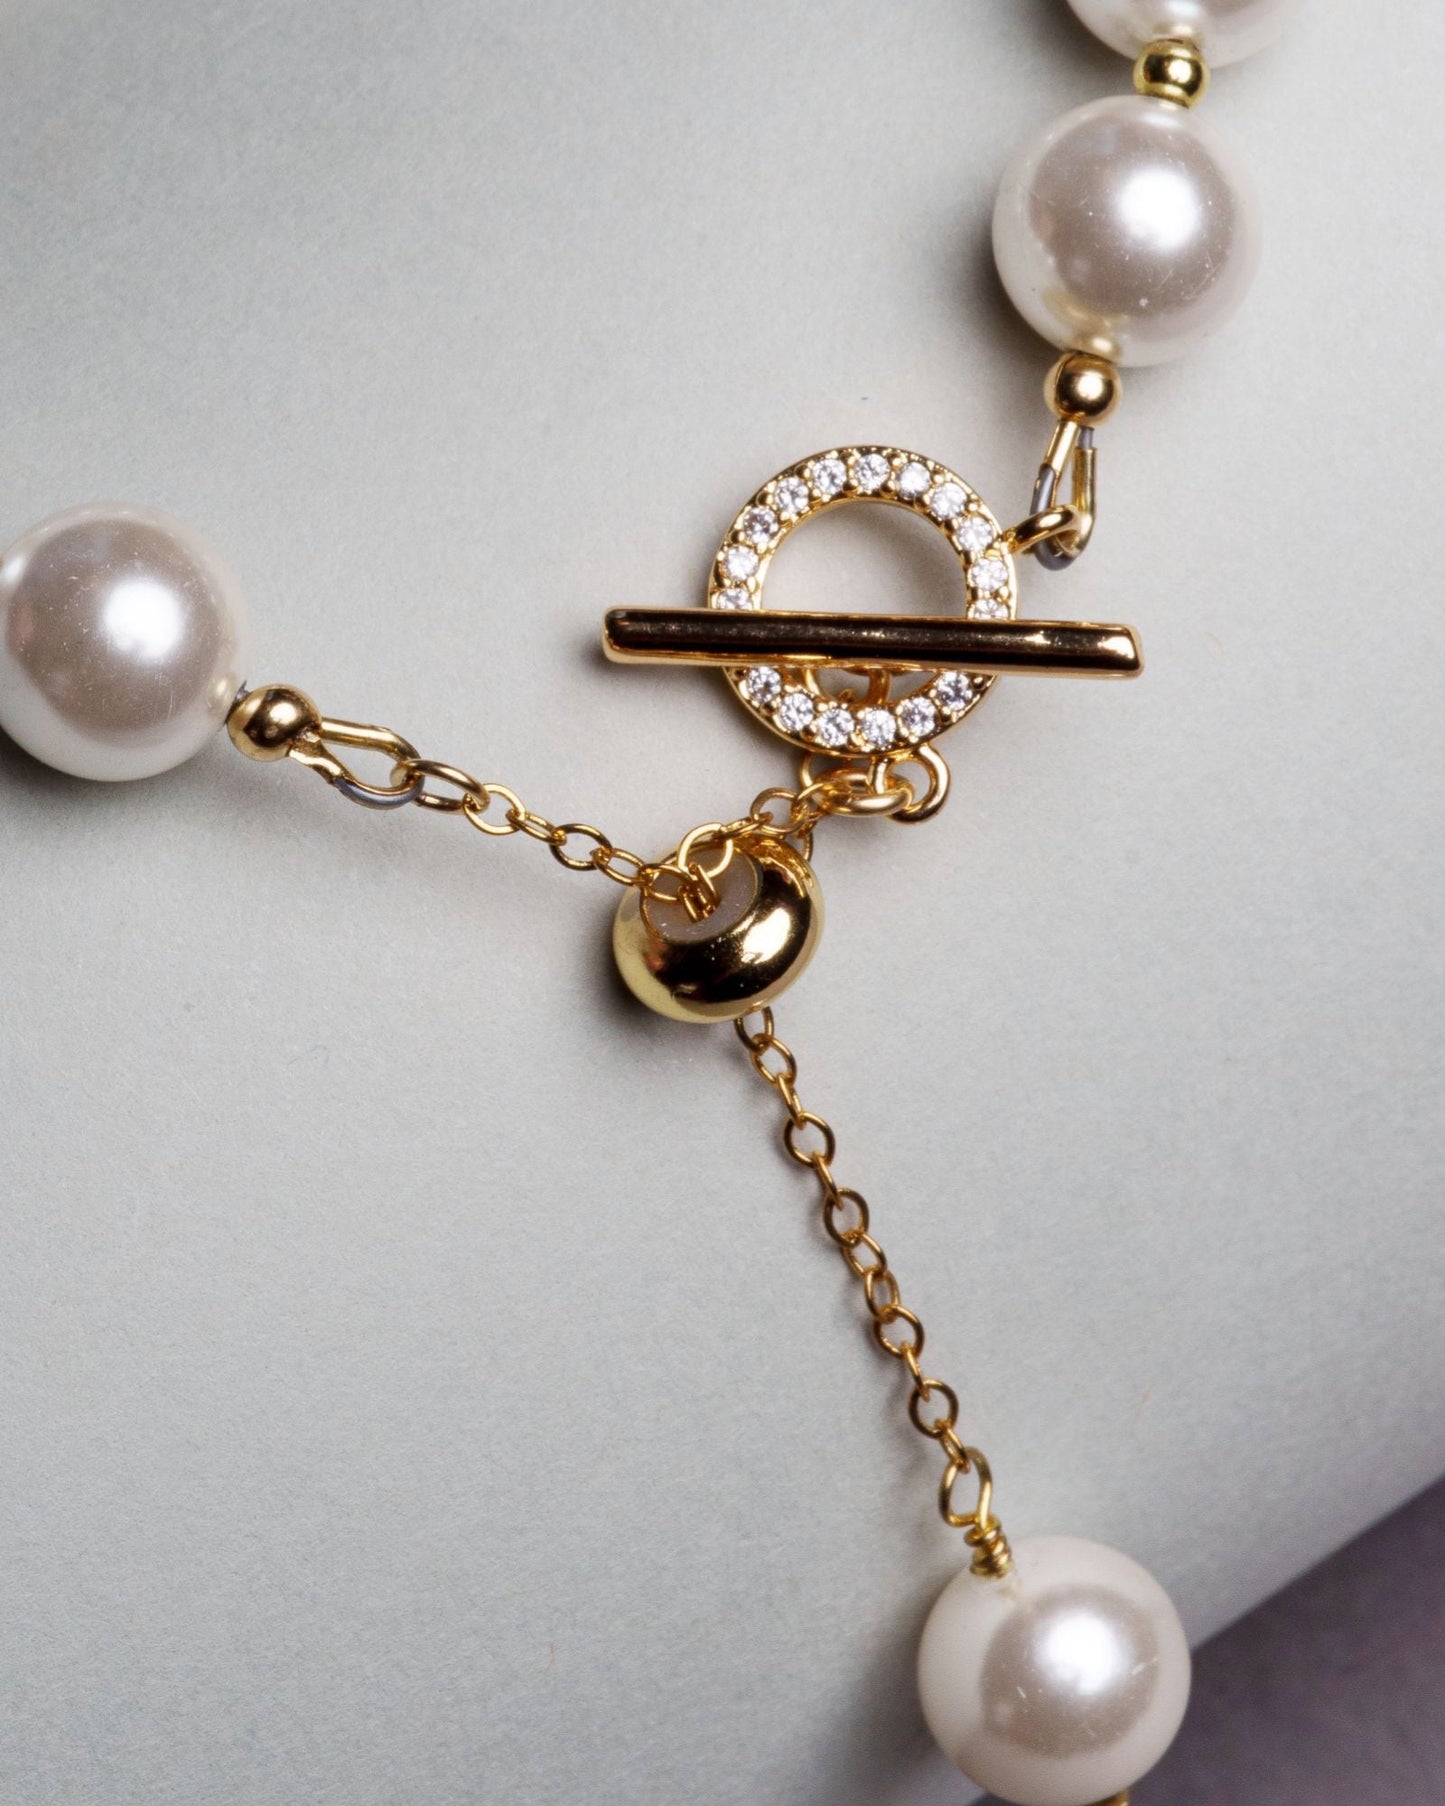 MicroPave Pearl Bracelet-Pearl Bracelet-Gold and Pearl Bracelet-Carabella By Cheryl